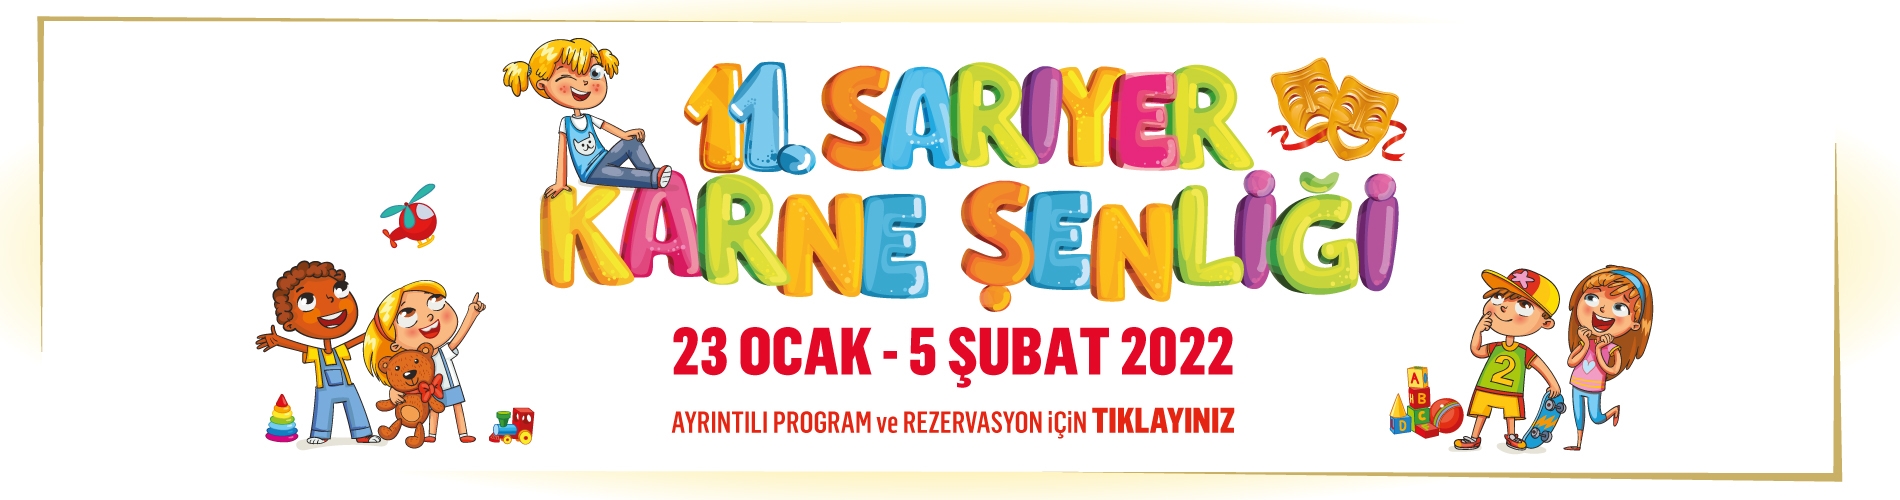 23012022-11-sariyer-karne-senligi